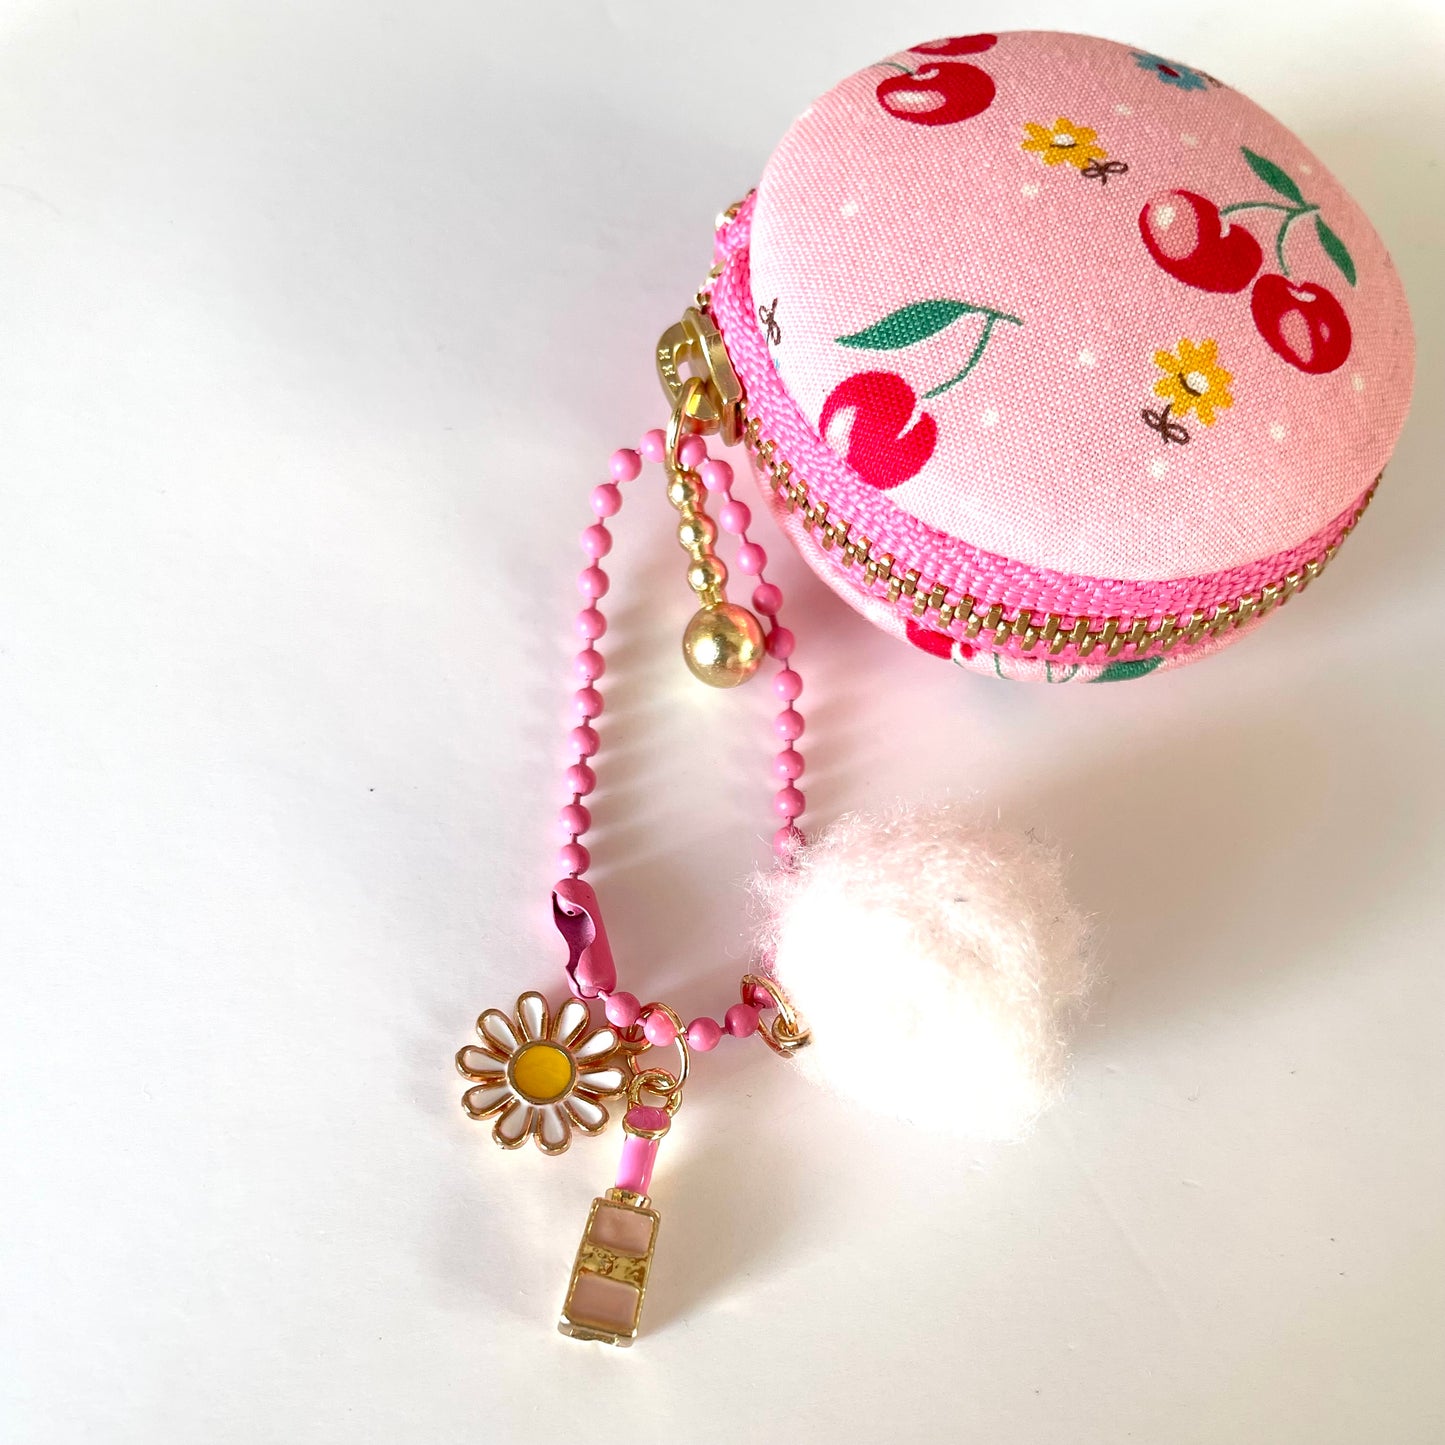 Sewing Kit - Mini Macaron Purse (pink cherry)